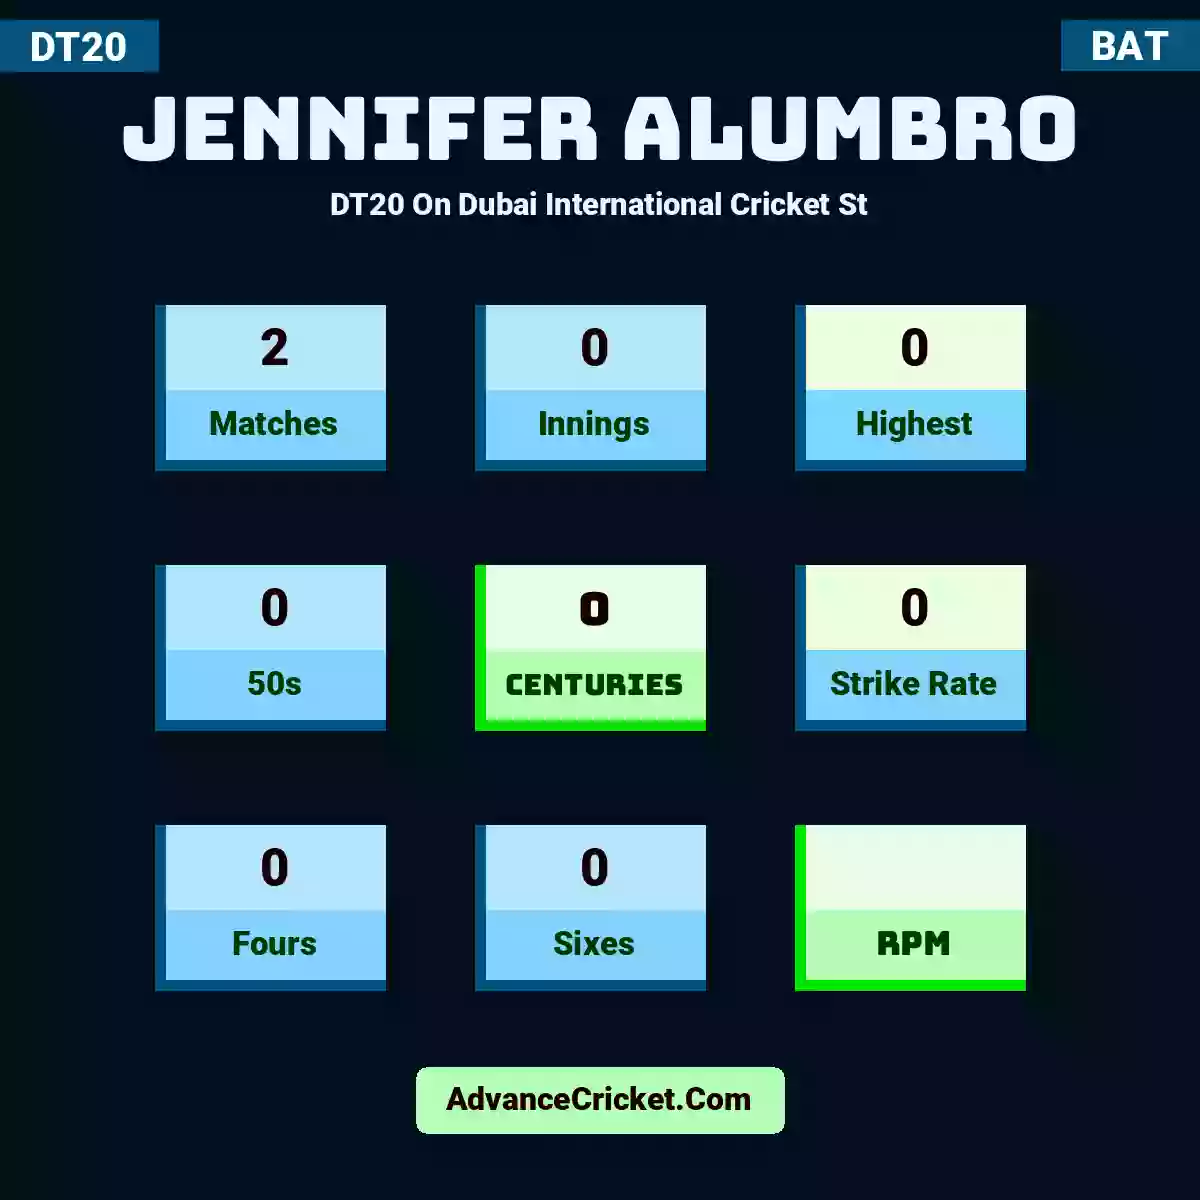 Jennifer Alumbro DT20  On Dubai International Cricket St, Jennifer Alumbro played 2 matches, scored 0 runs as highest, 0 half-centuries, and 0 centuries, with a strike rate of 0. J.Alumbro hit 0 fours and 0 sixes.